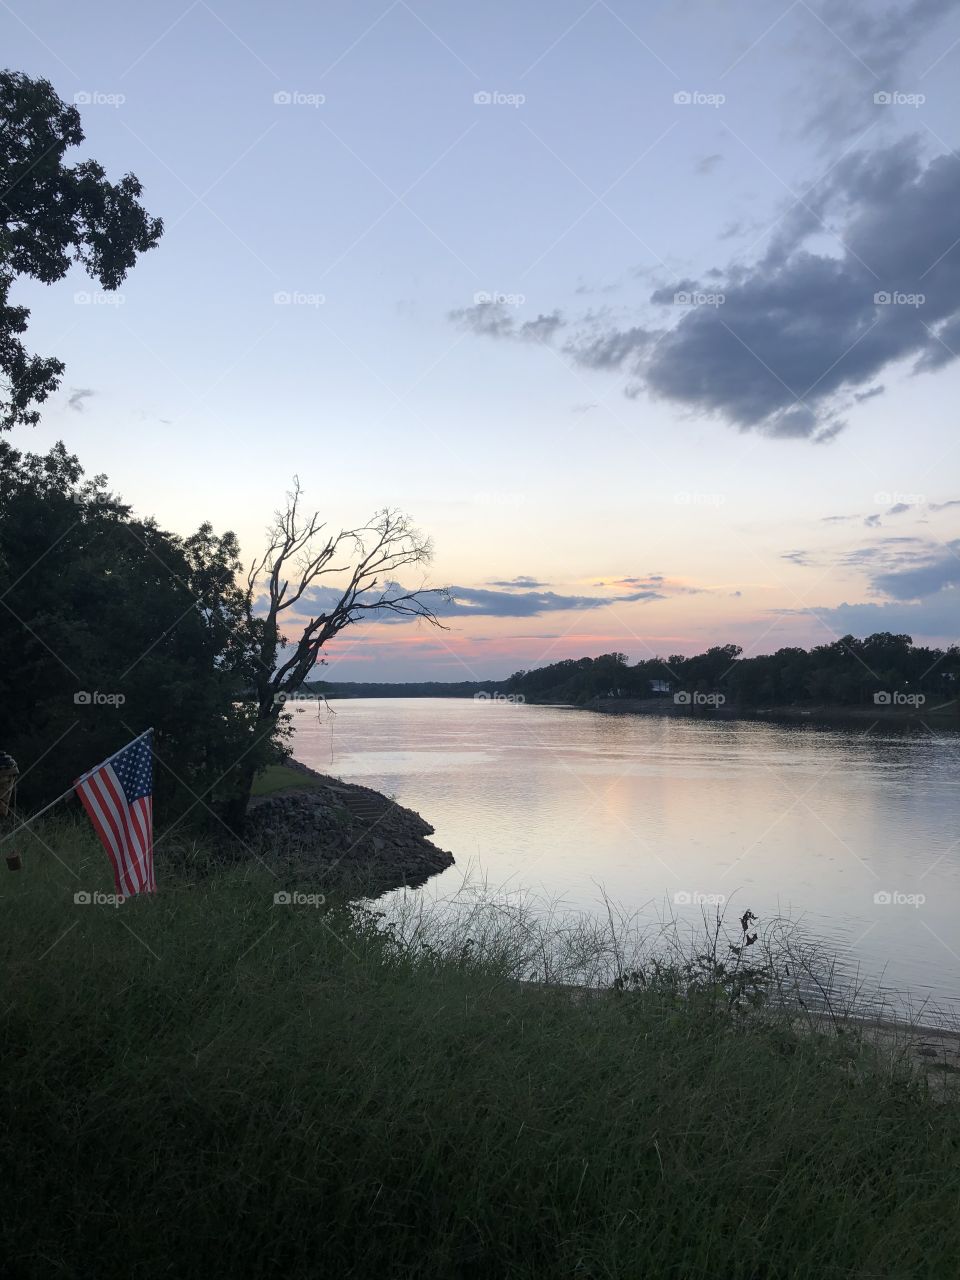 Sunset America river days